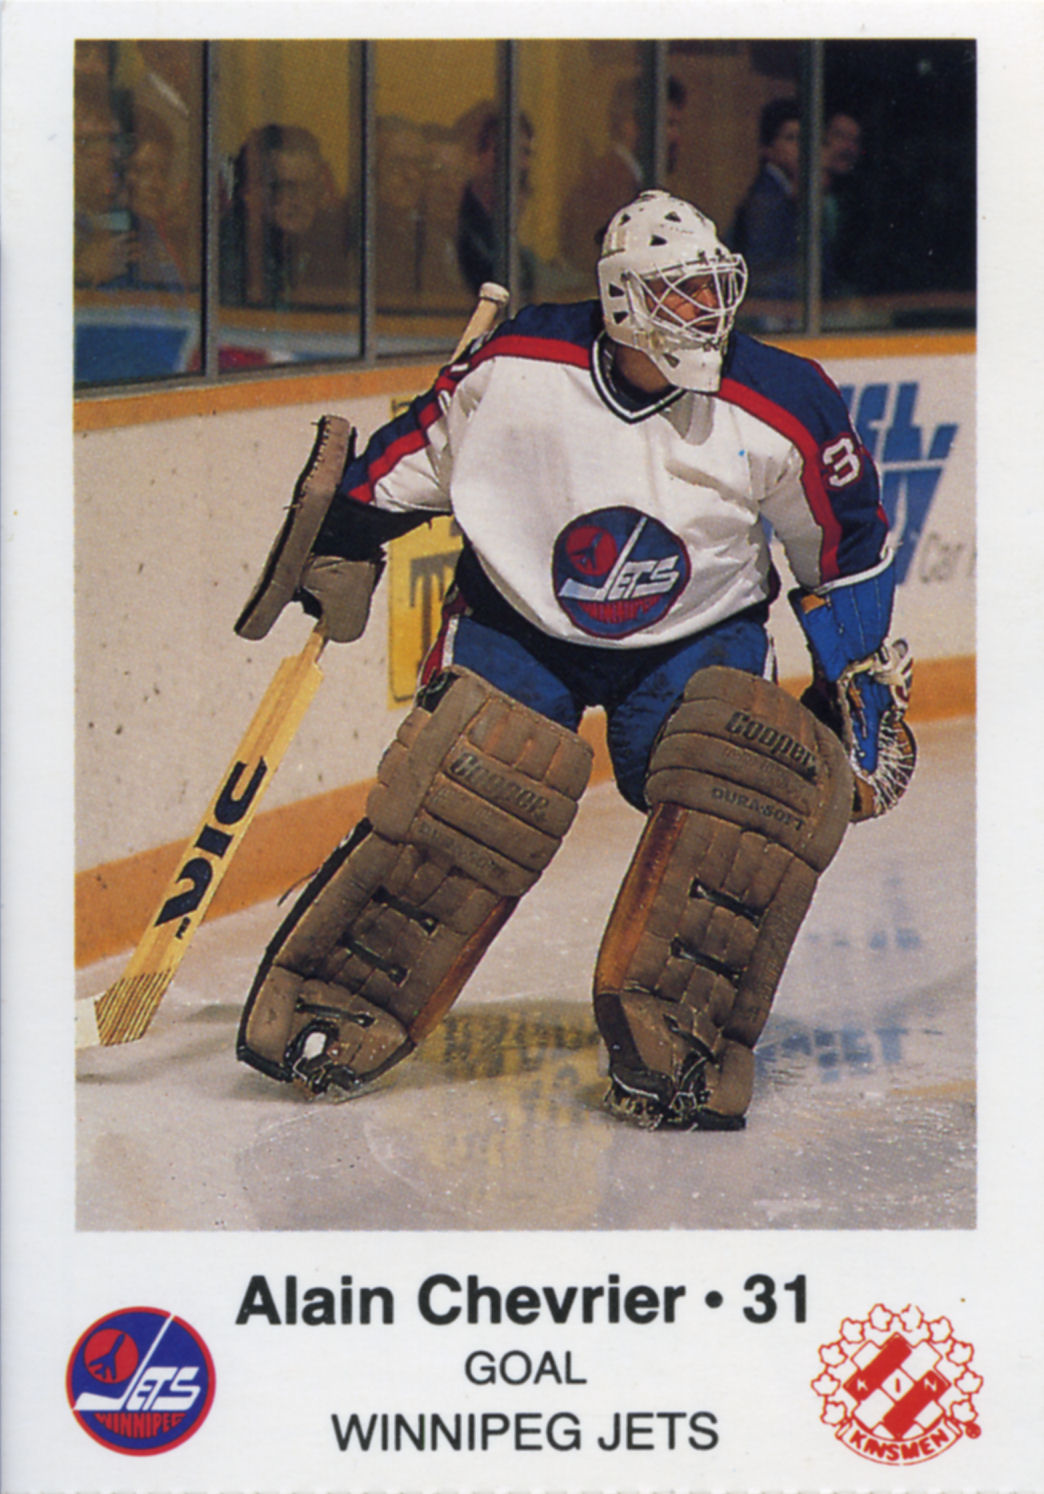 Winnipeg Jets 1988-89 hockey card image